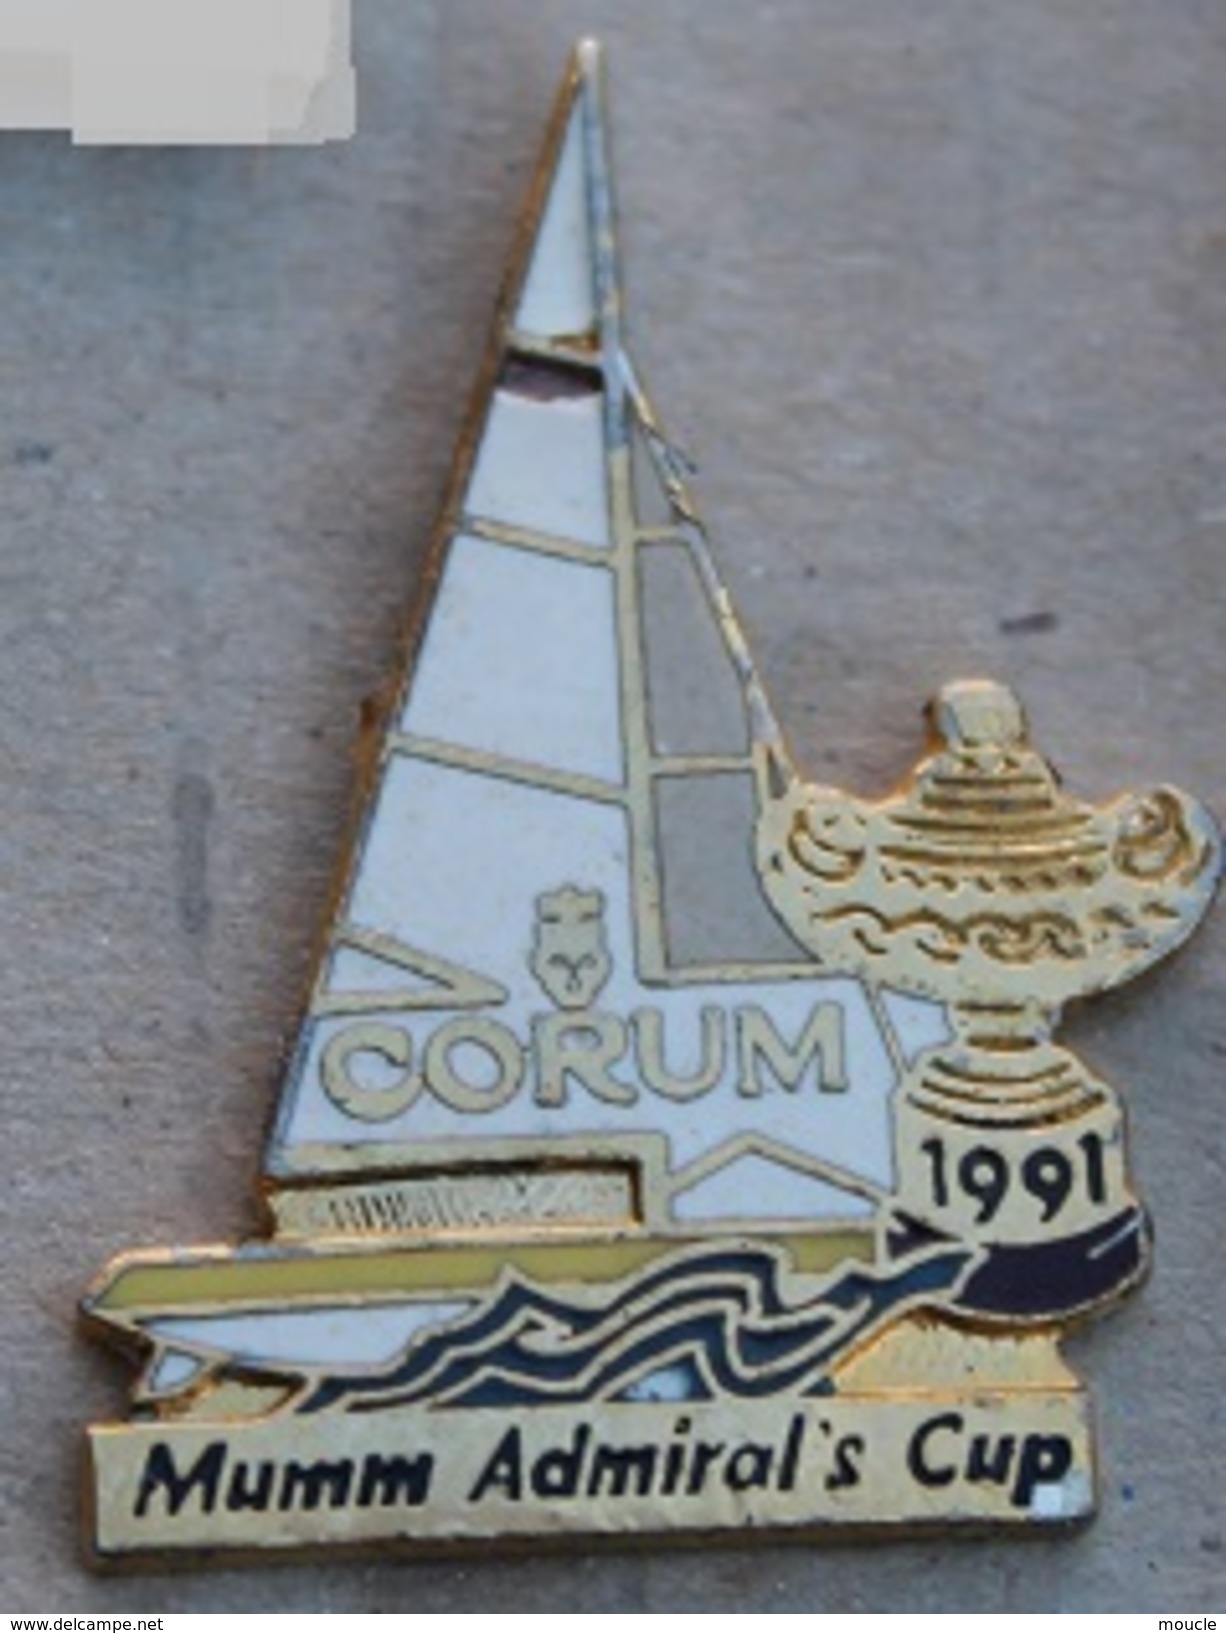 BATEAU - VOILIER - CORUM - MUMM ADMIRAL'S CUP 1991 - MER - NAVIRE -          (15) - Barcos